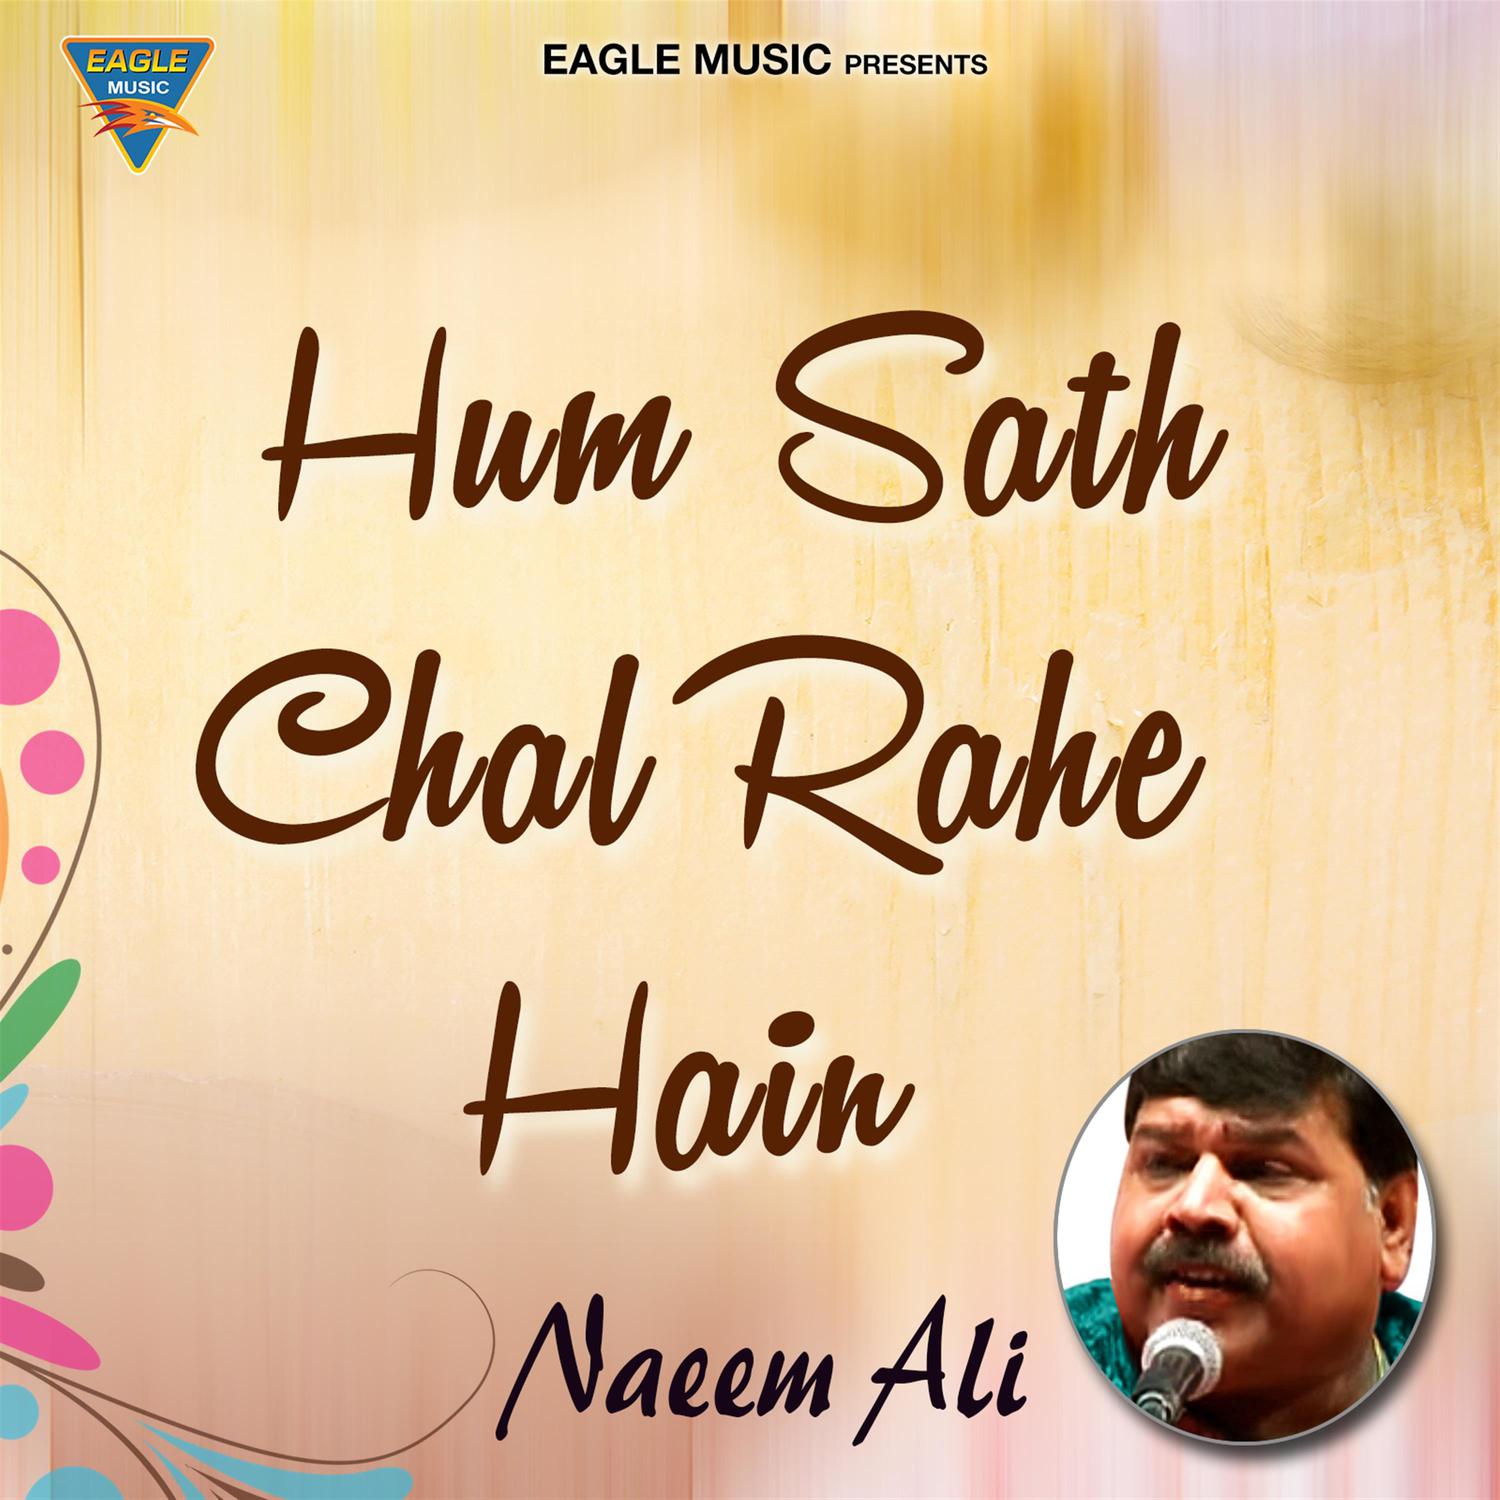 Hum Saath Chal Rahein Hain - Single